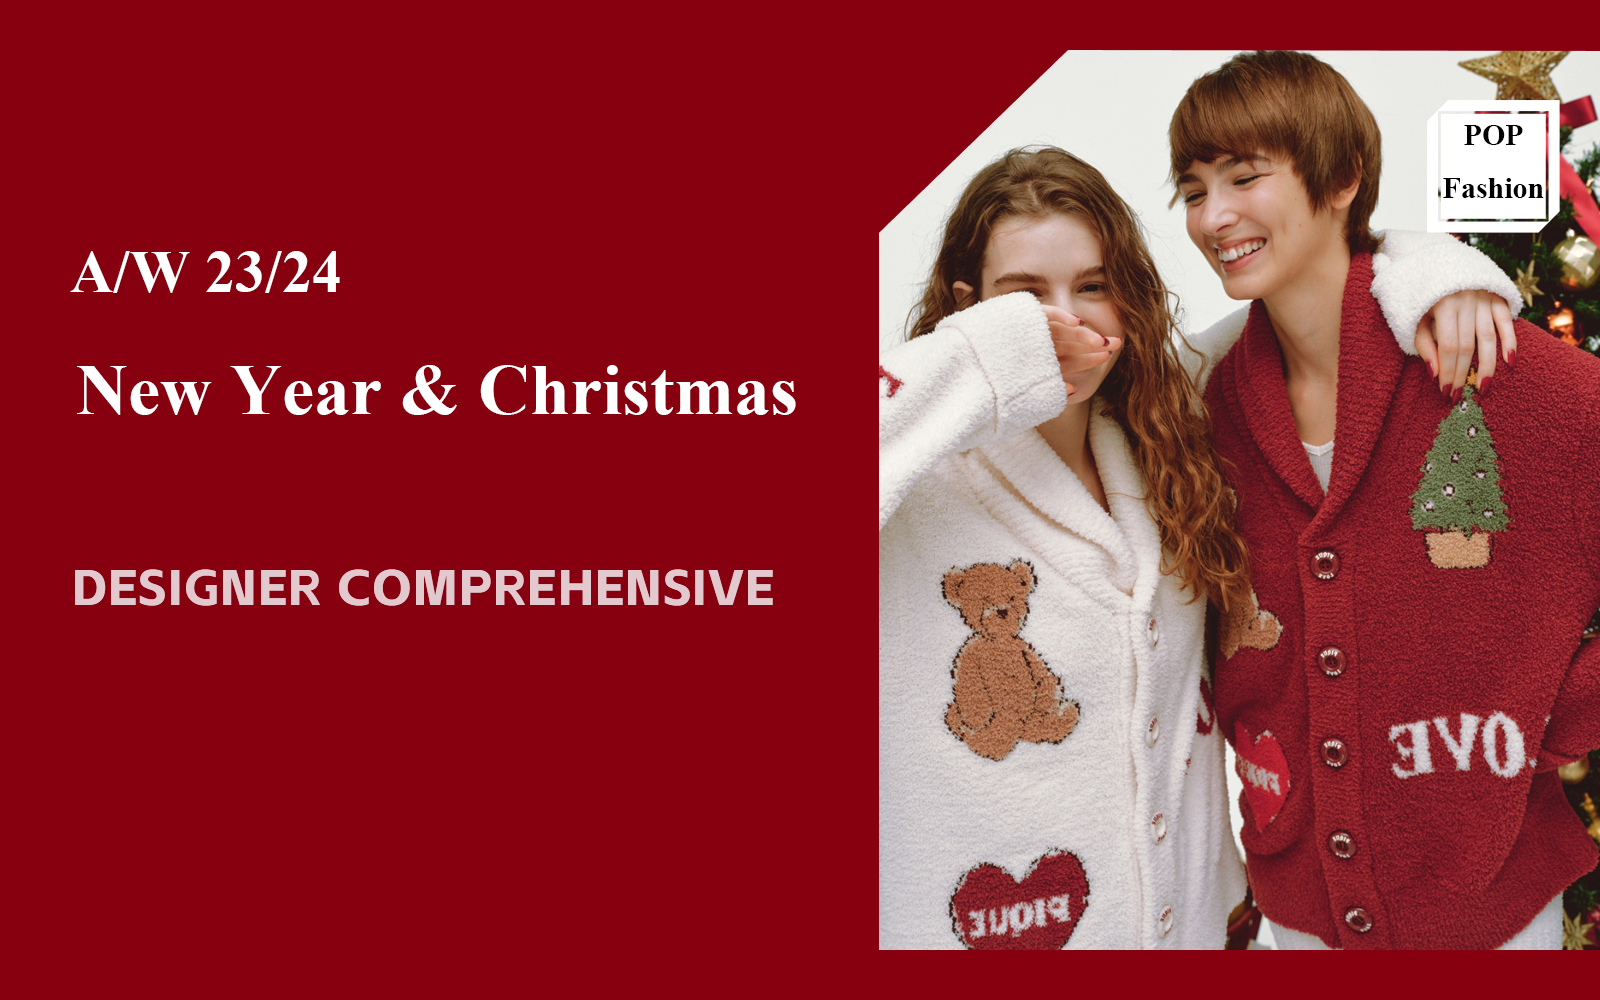 New Year & Christmas -- The Comprehensive Analysis of Underwear & Loungewear Designer Brand